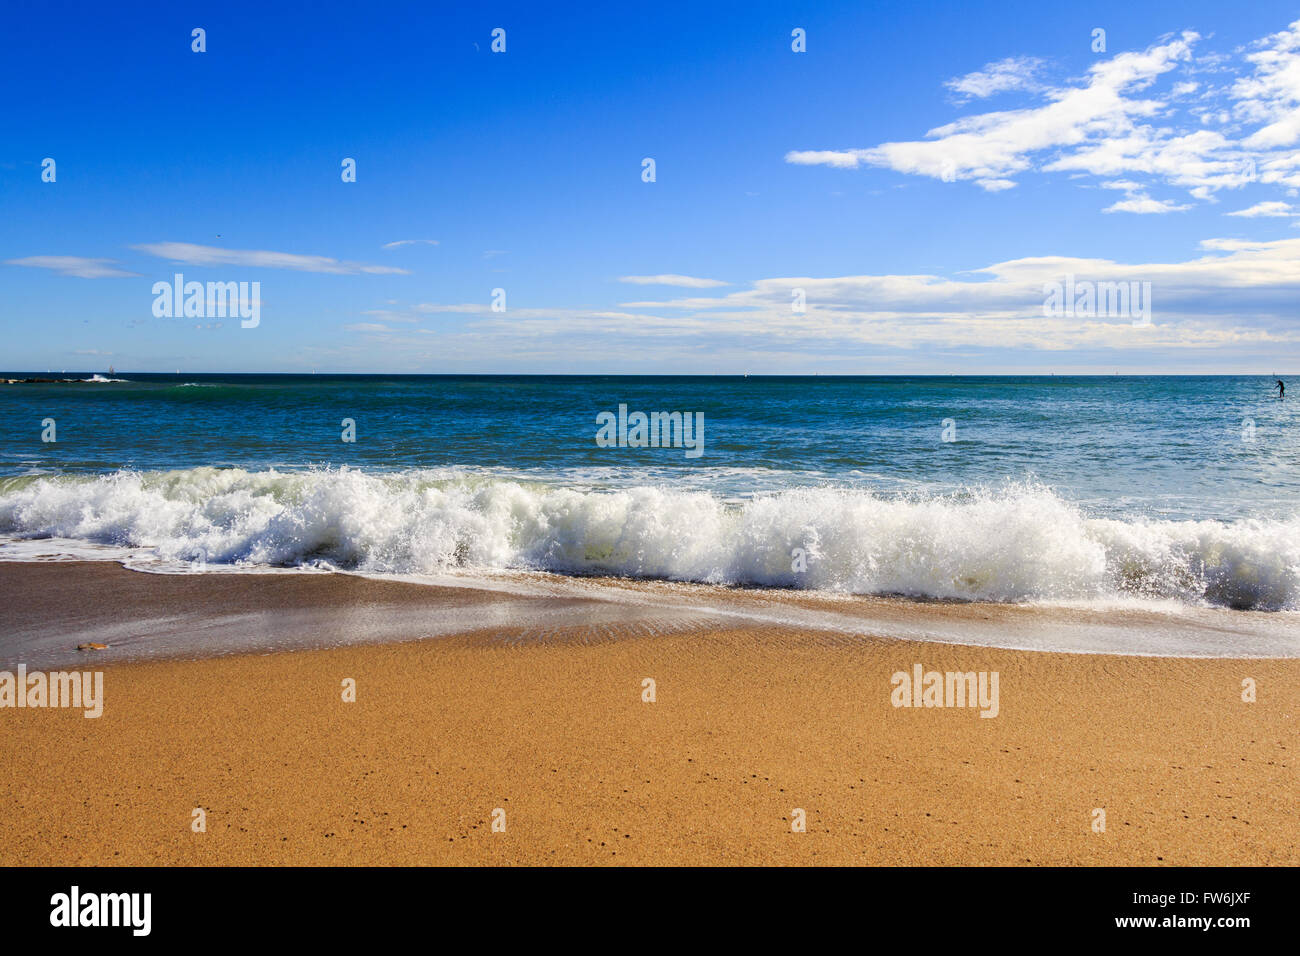 sea beach blue sky sand sun daylight relaxation landscape viewpoint for design postcard and calendar Stock Photo